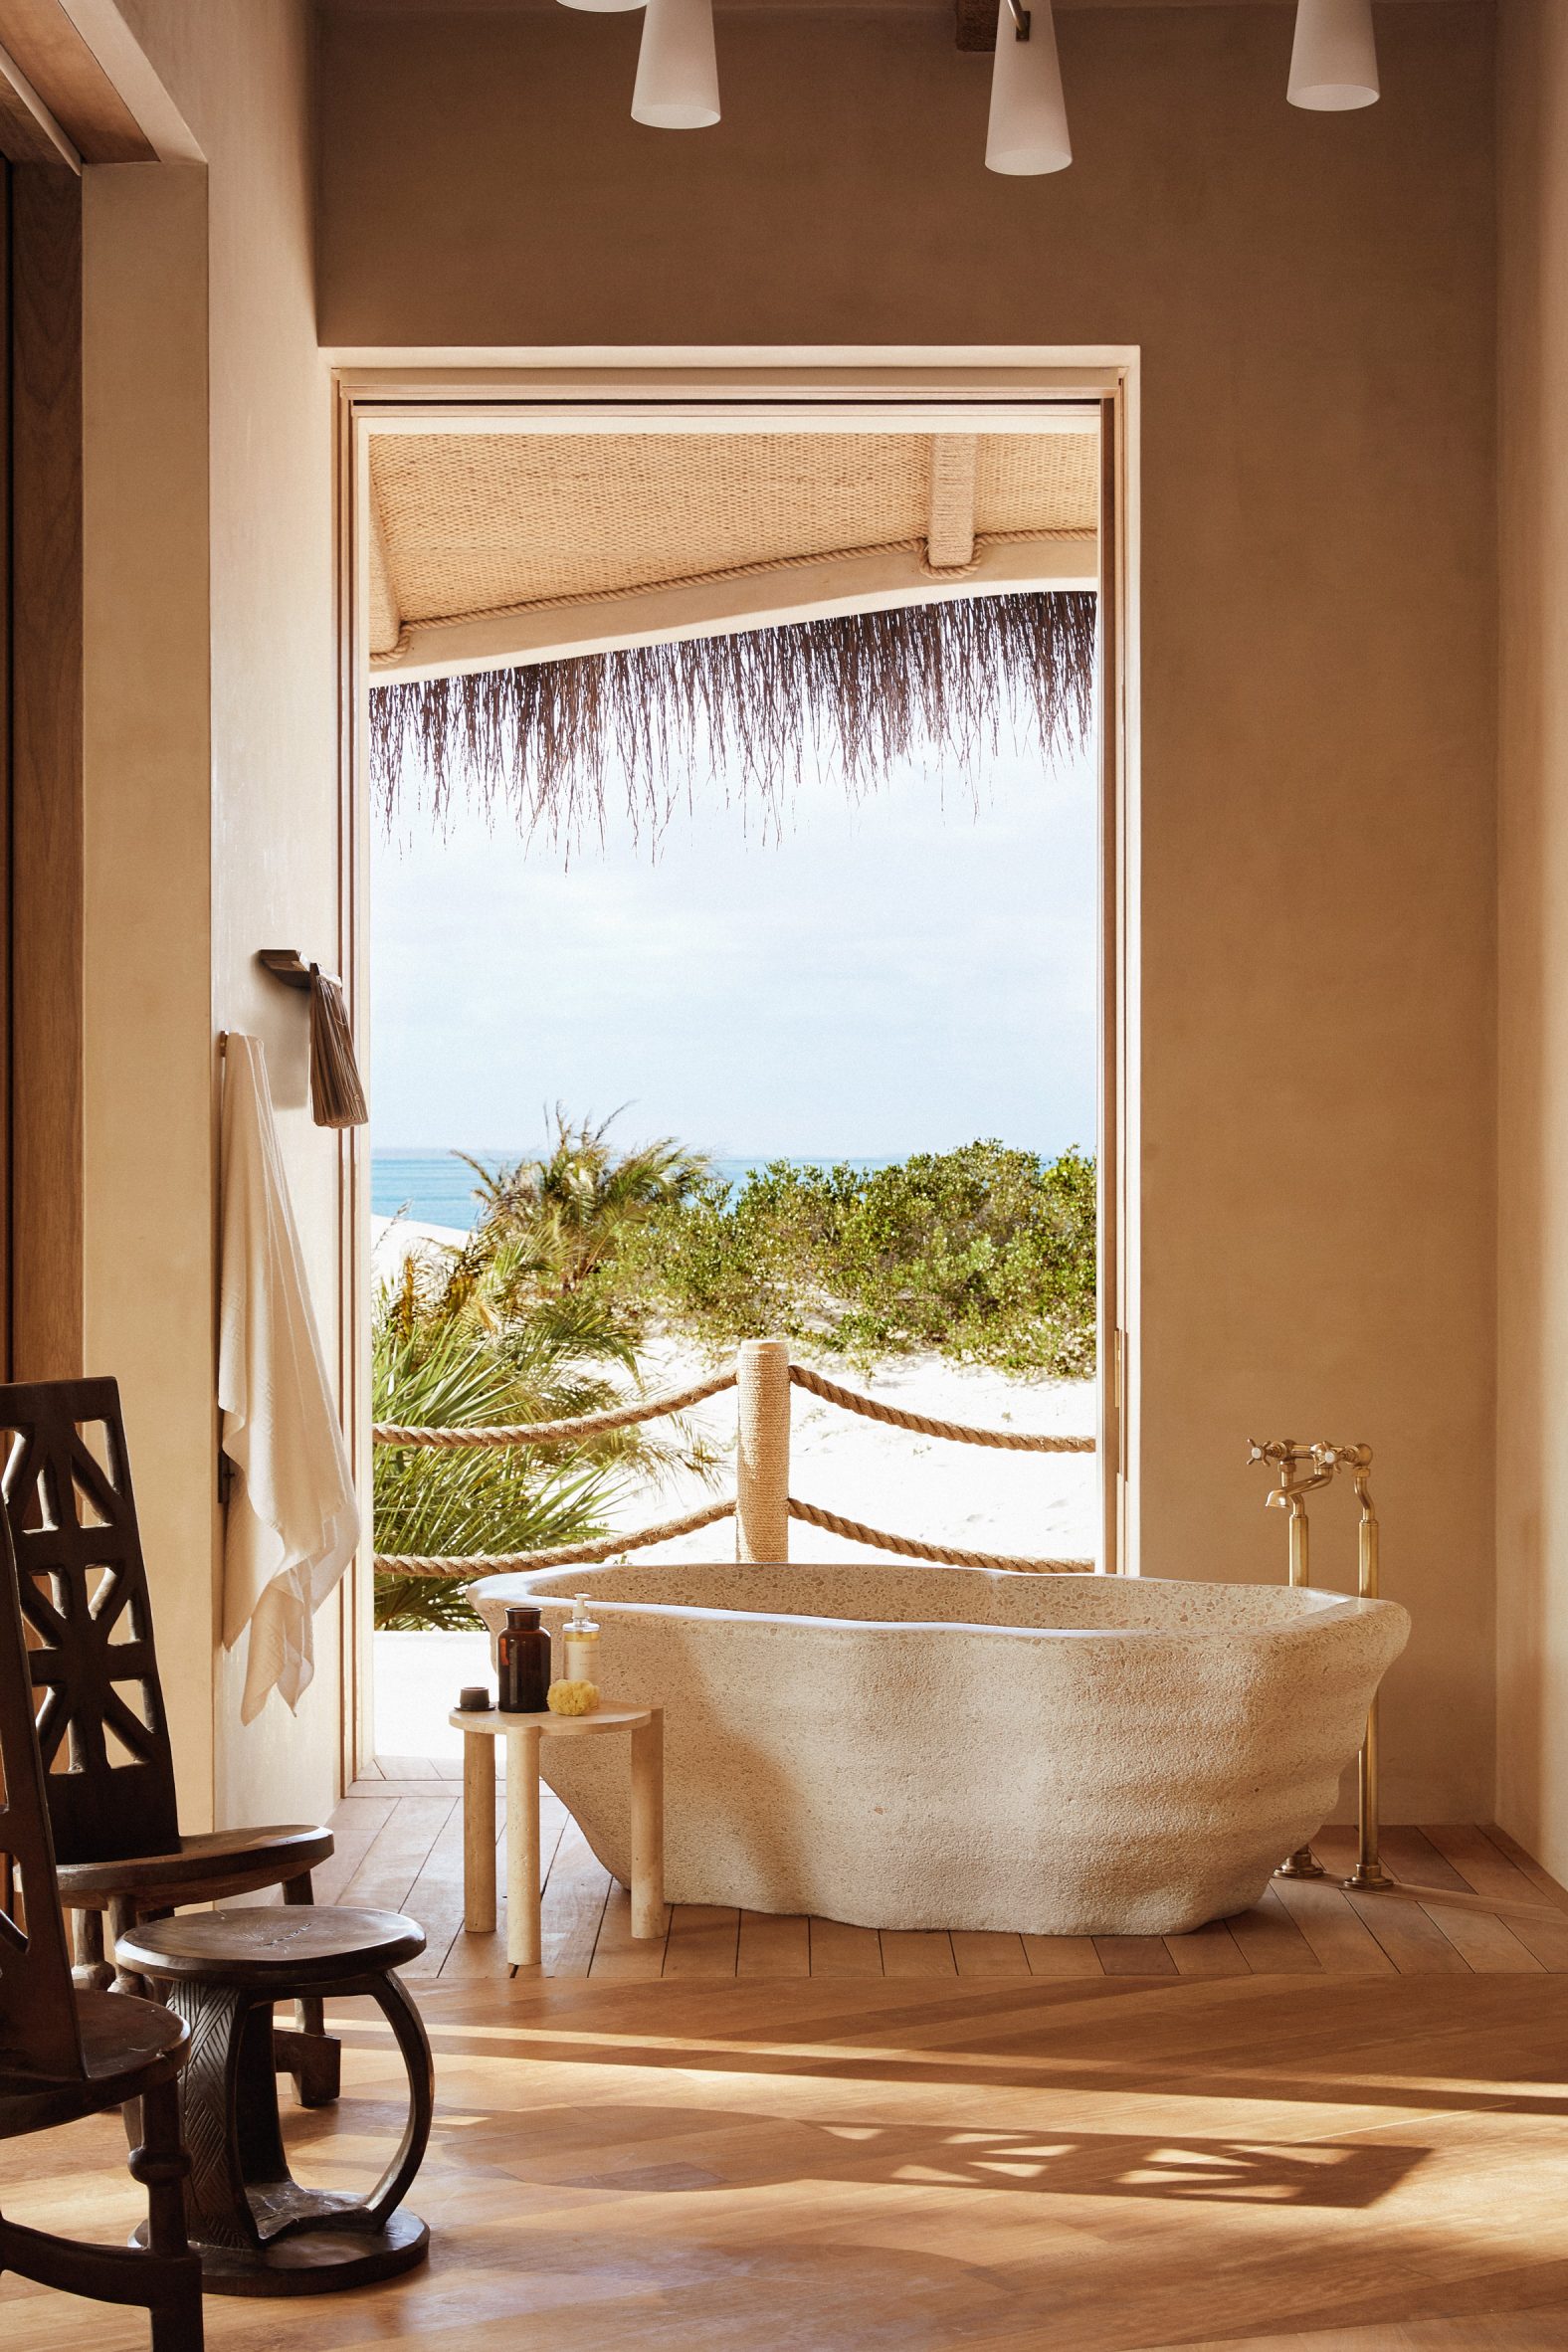 Bathroom with beach view